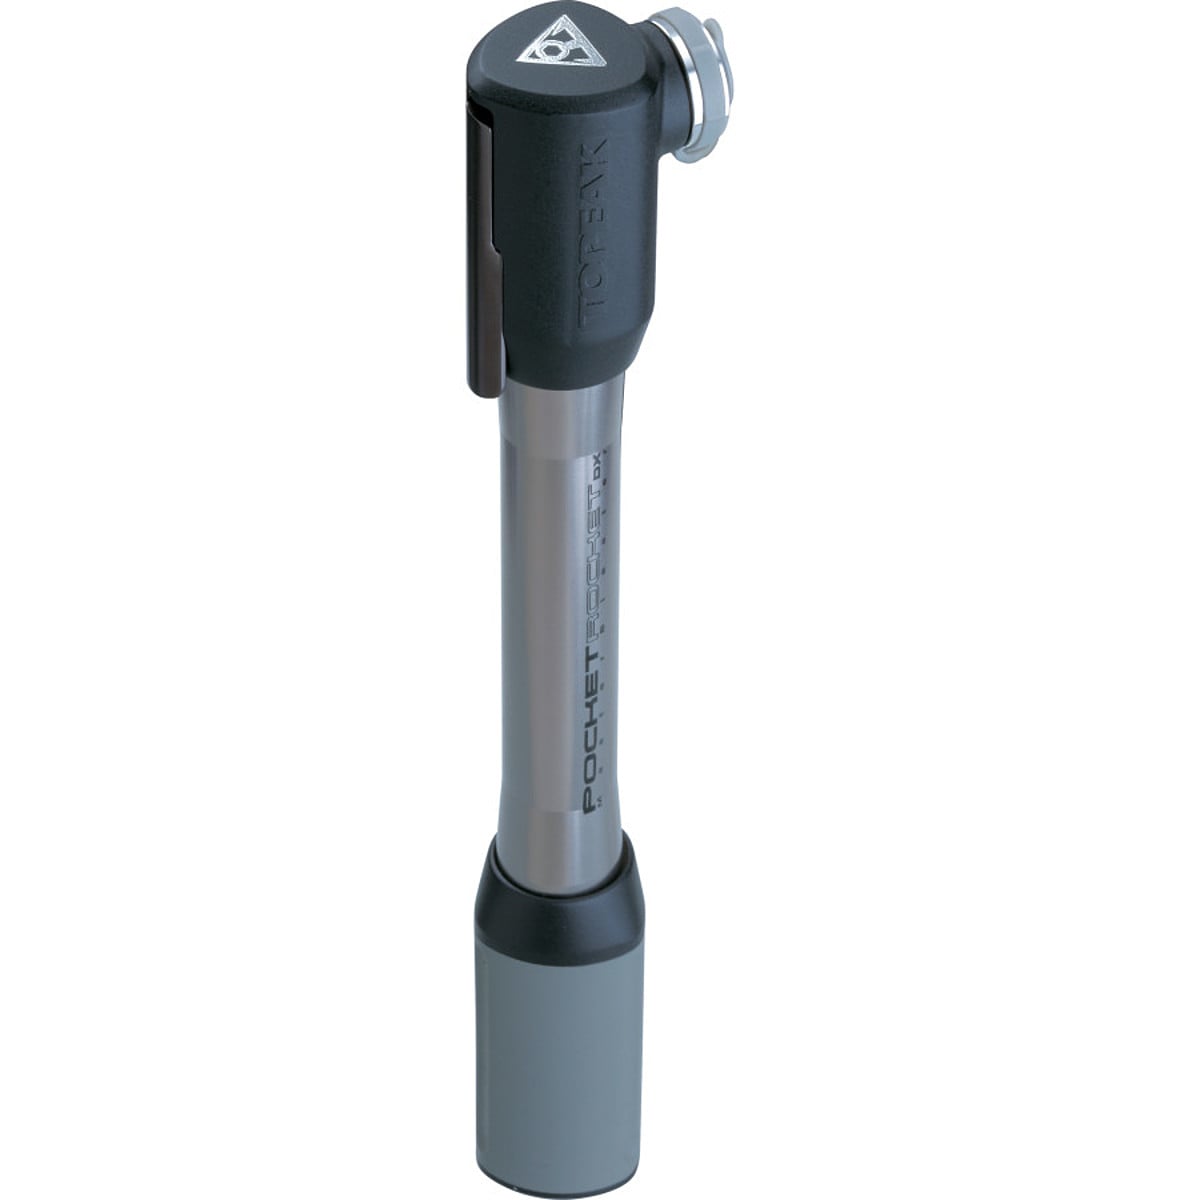 Topeak Pocket Rocket DX II Mini-Pump